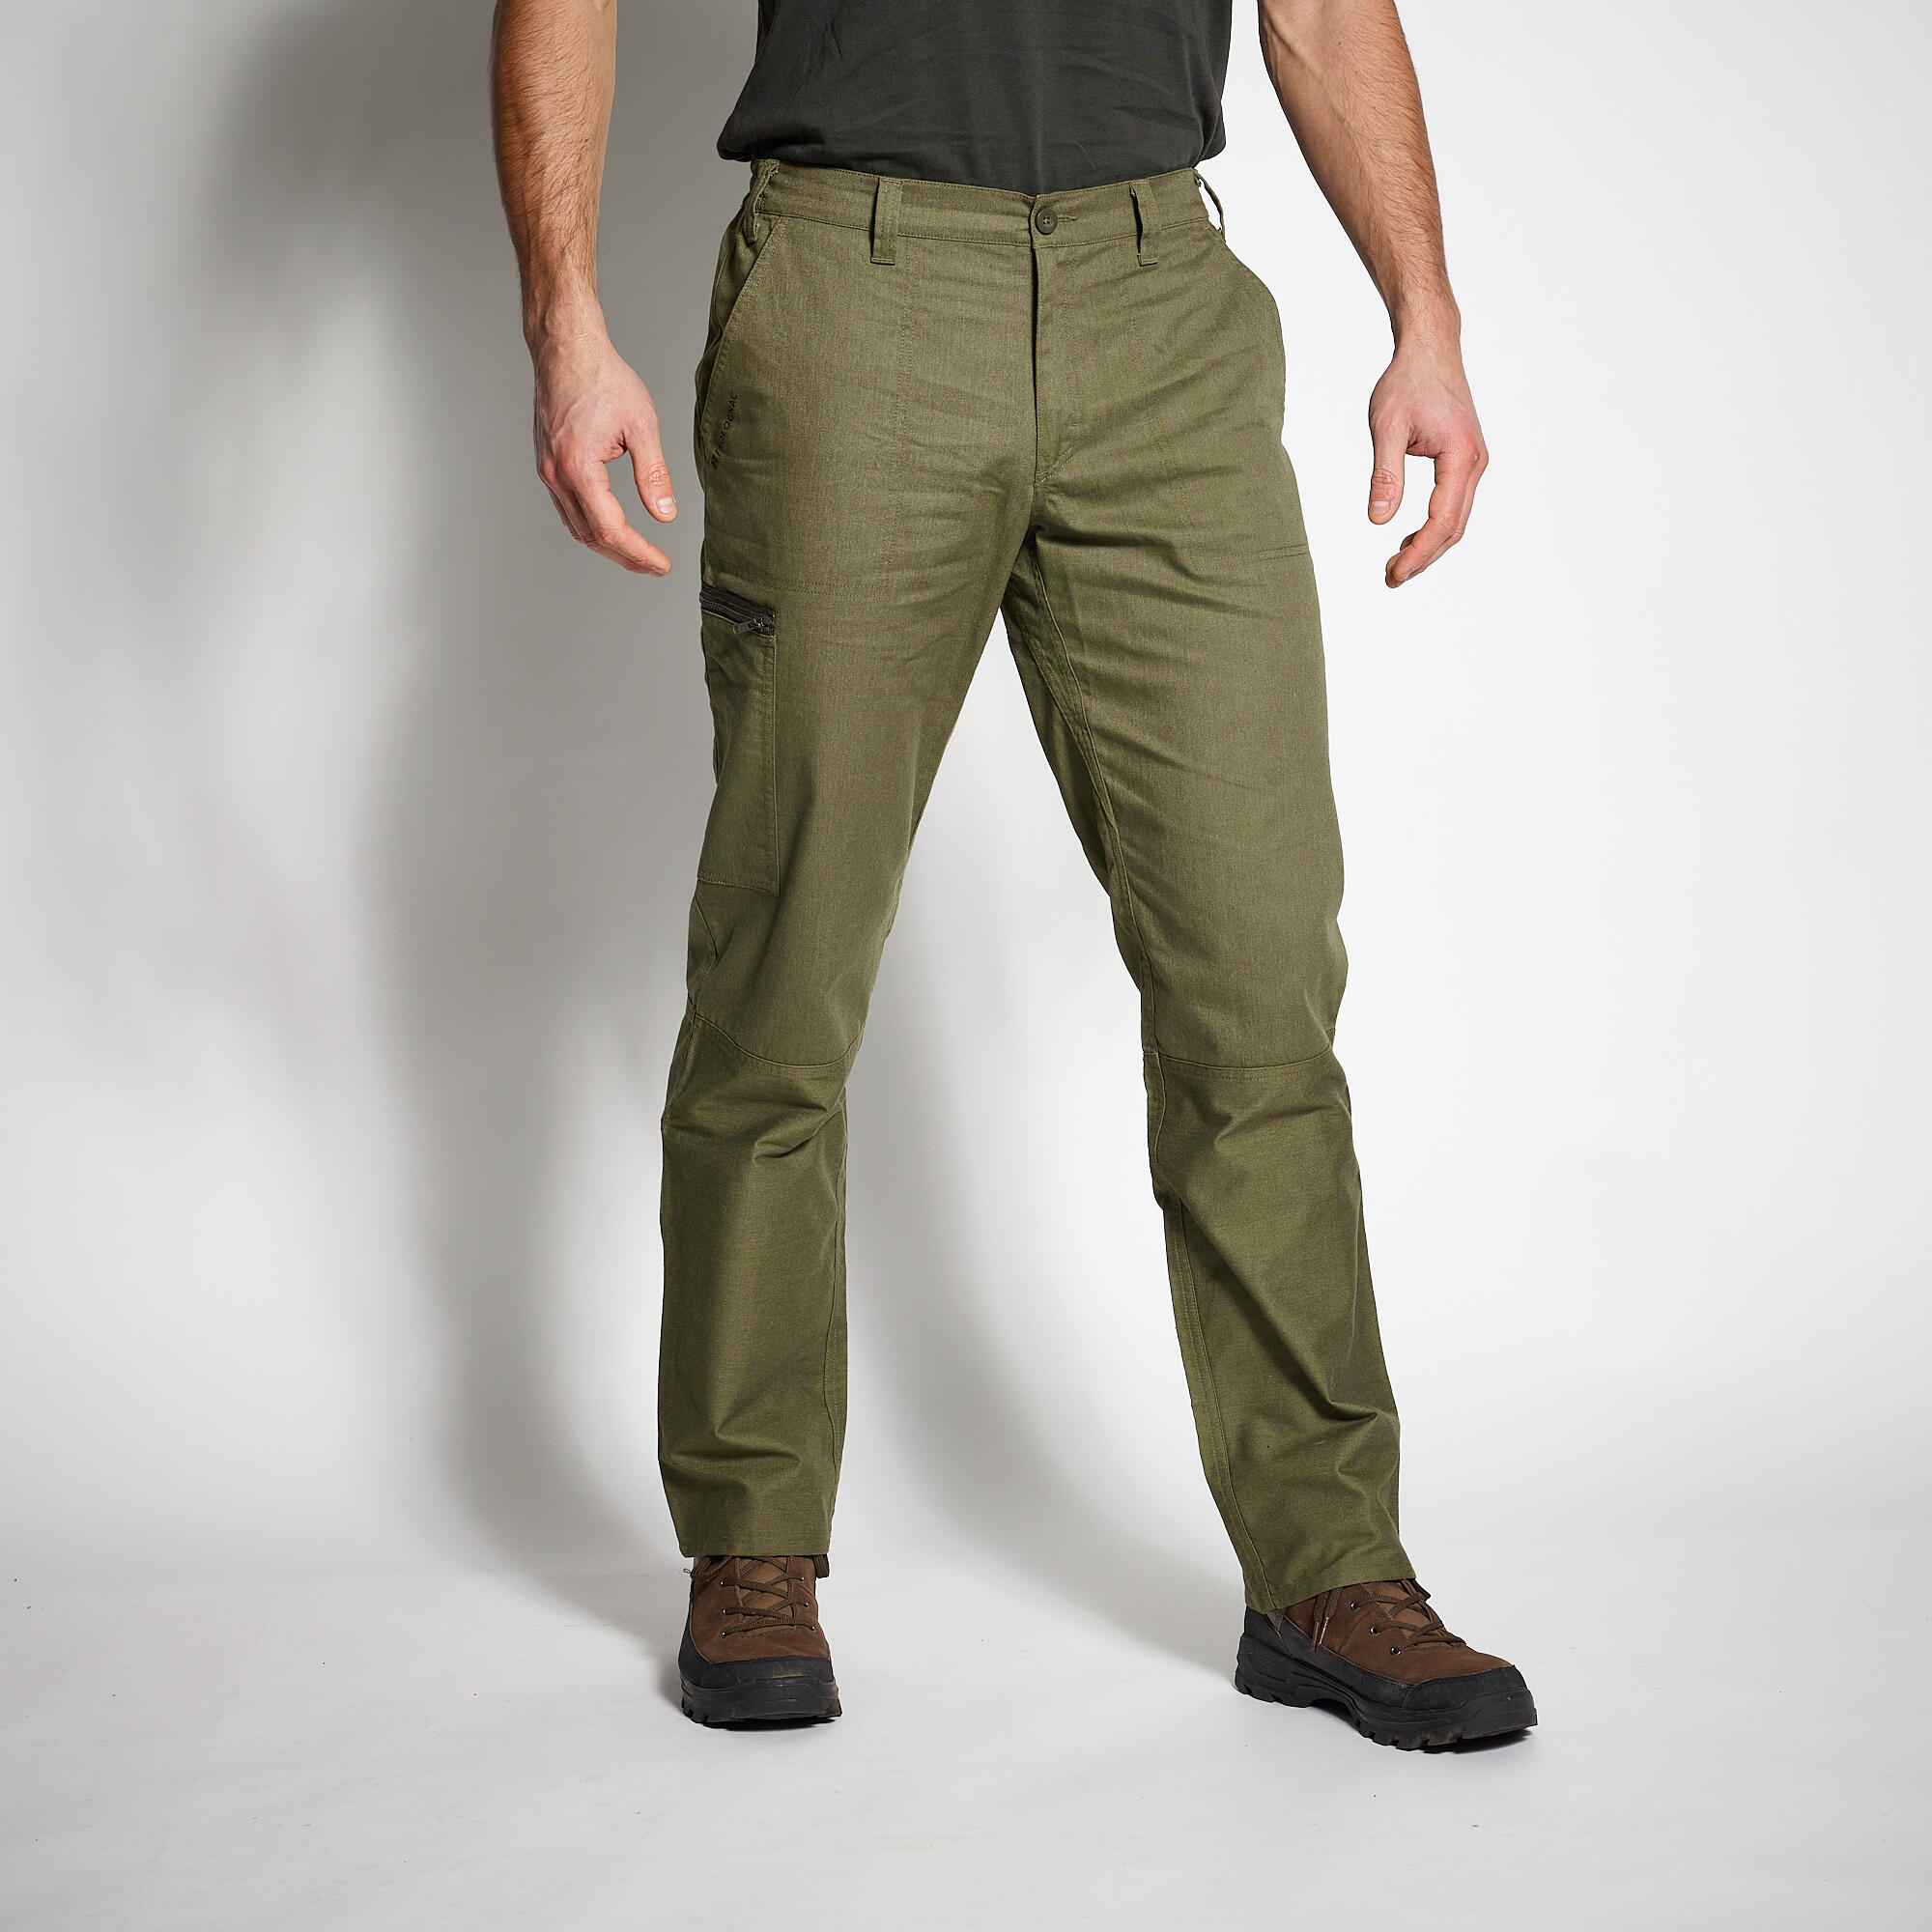 WrightFits Mens Cargo Work Trousers Combat Workwear Pants With Cargo  Pockets APB | eBay